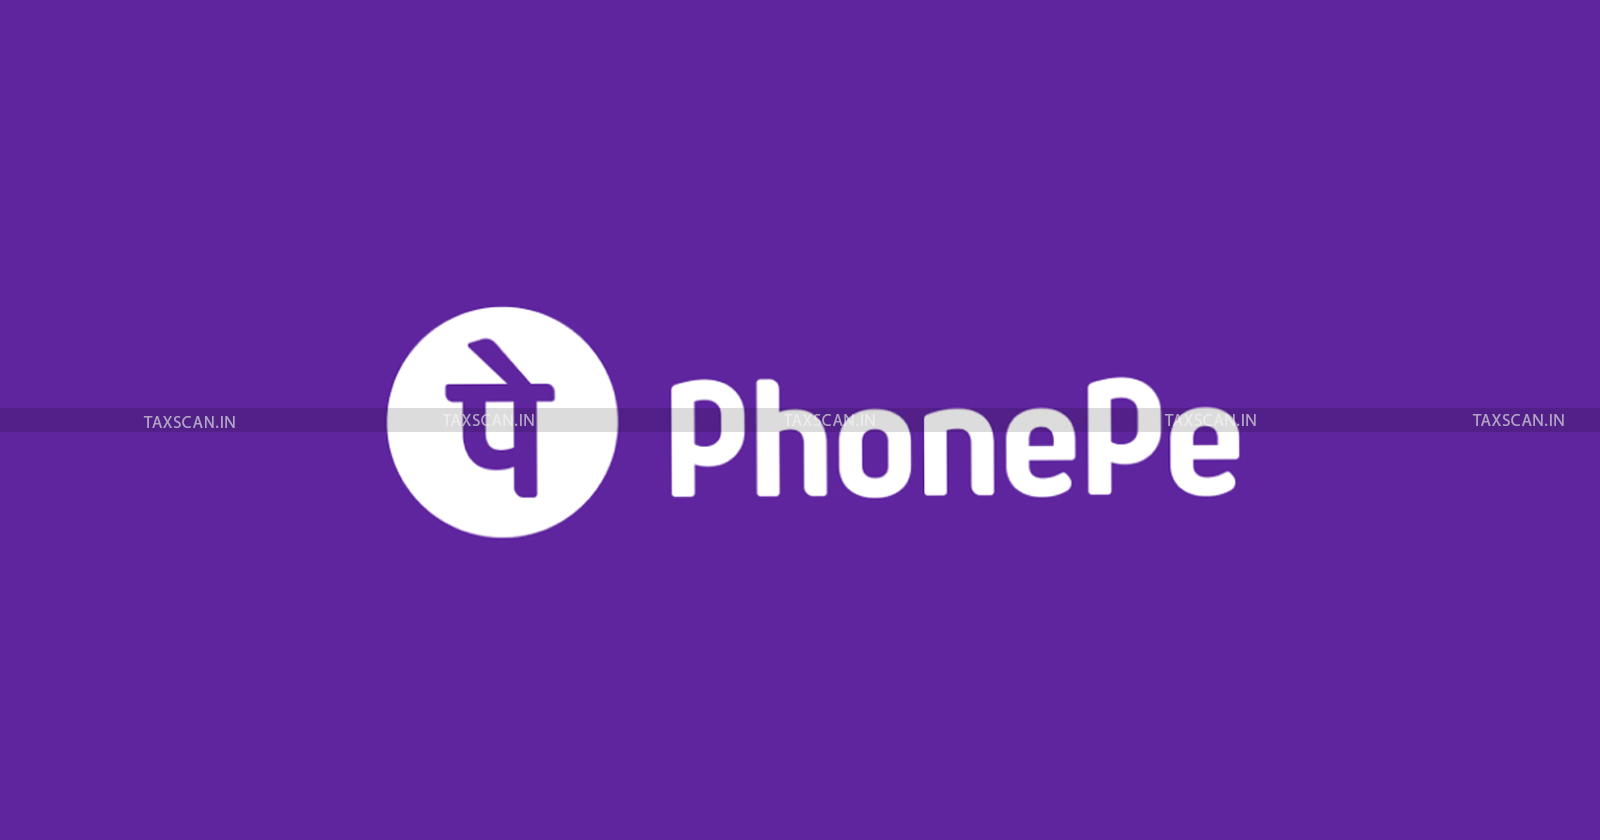 Phonepe - Phonepe Hiring - Phonepe Careers - Phonepe Jobs - CA Vacancy In Phonepe - Chartered Accountant Jobs In Phonepe - Taxscan